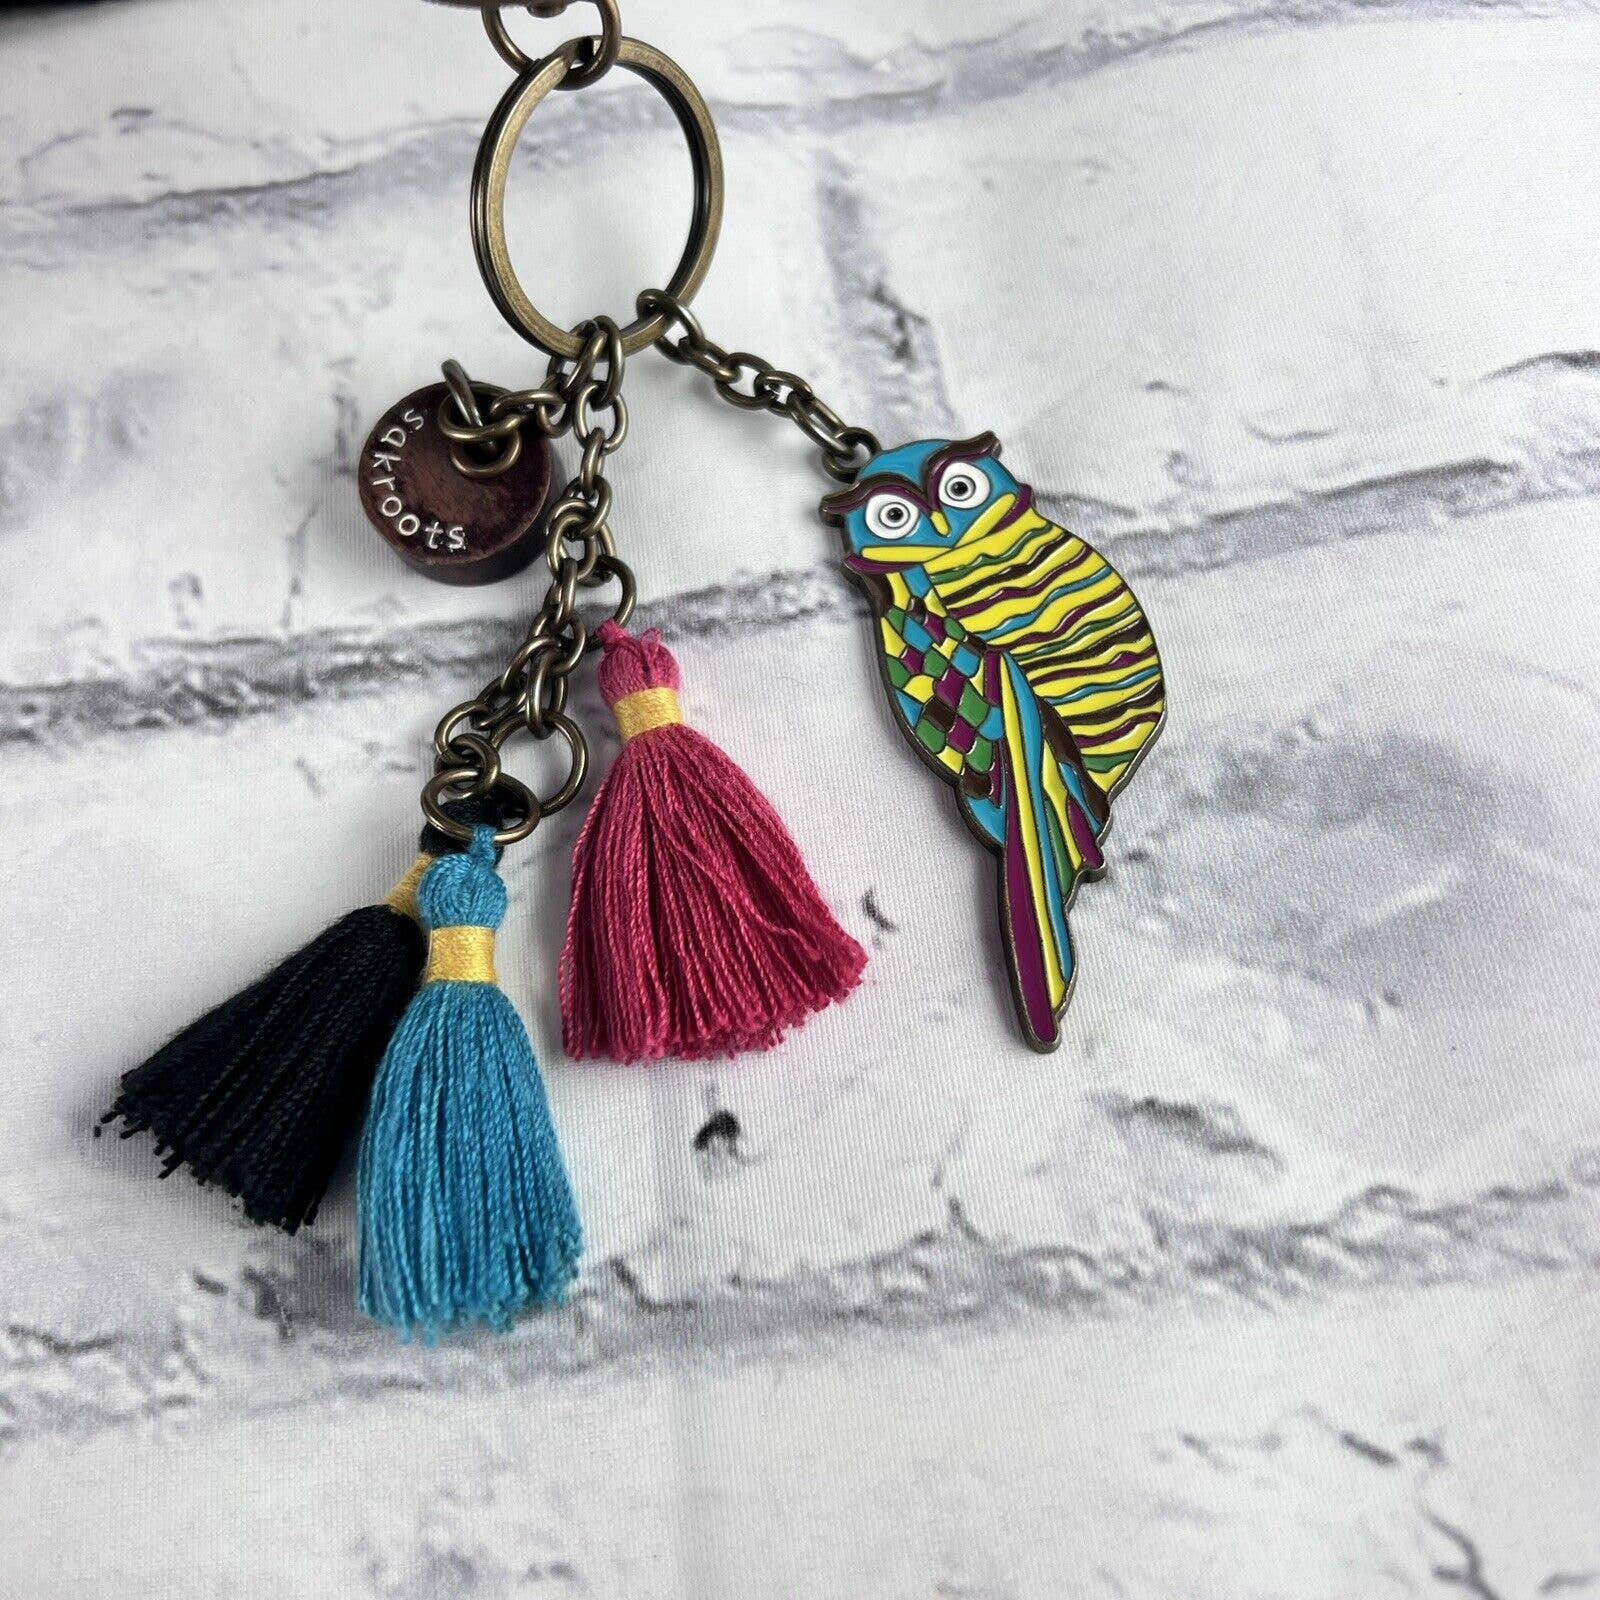 Sakroots Artist Circle Rainbow Spirit Desert Crossbody Bag Colorful Medium Purse